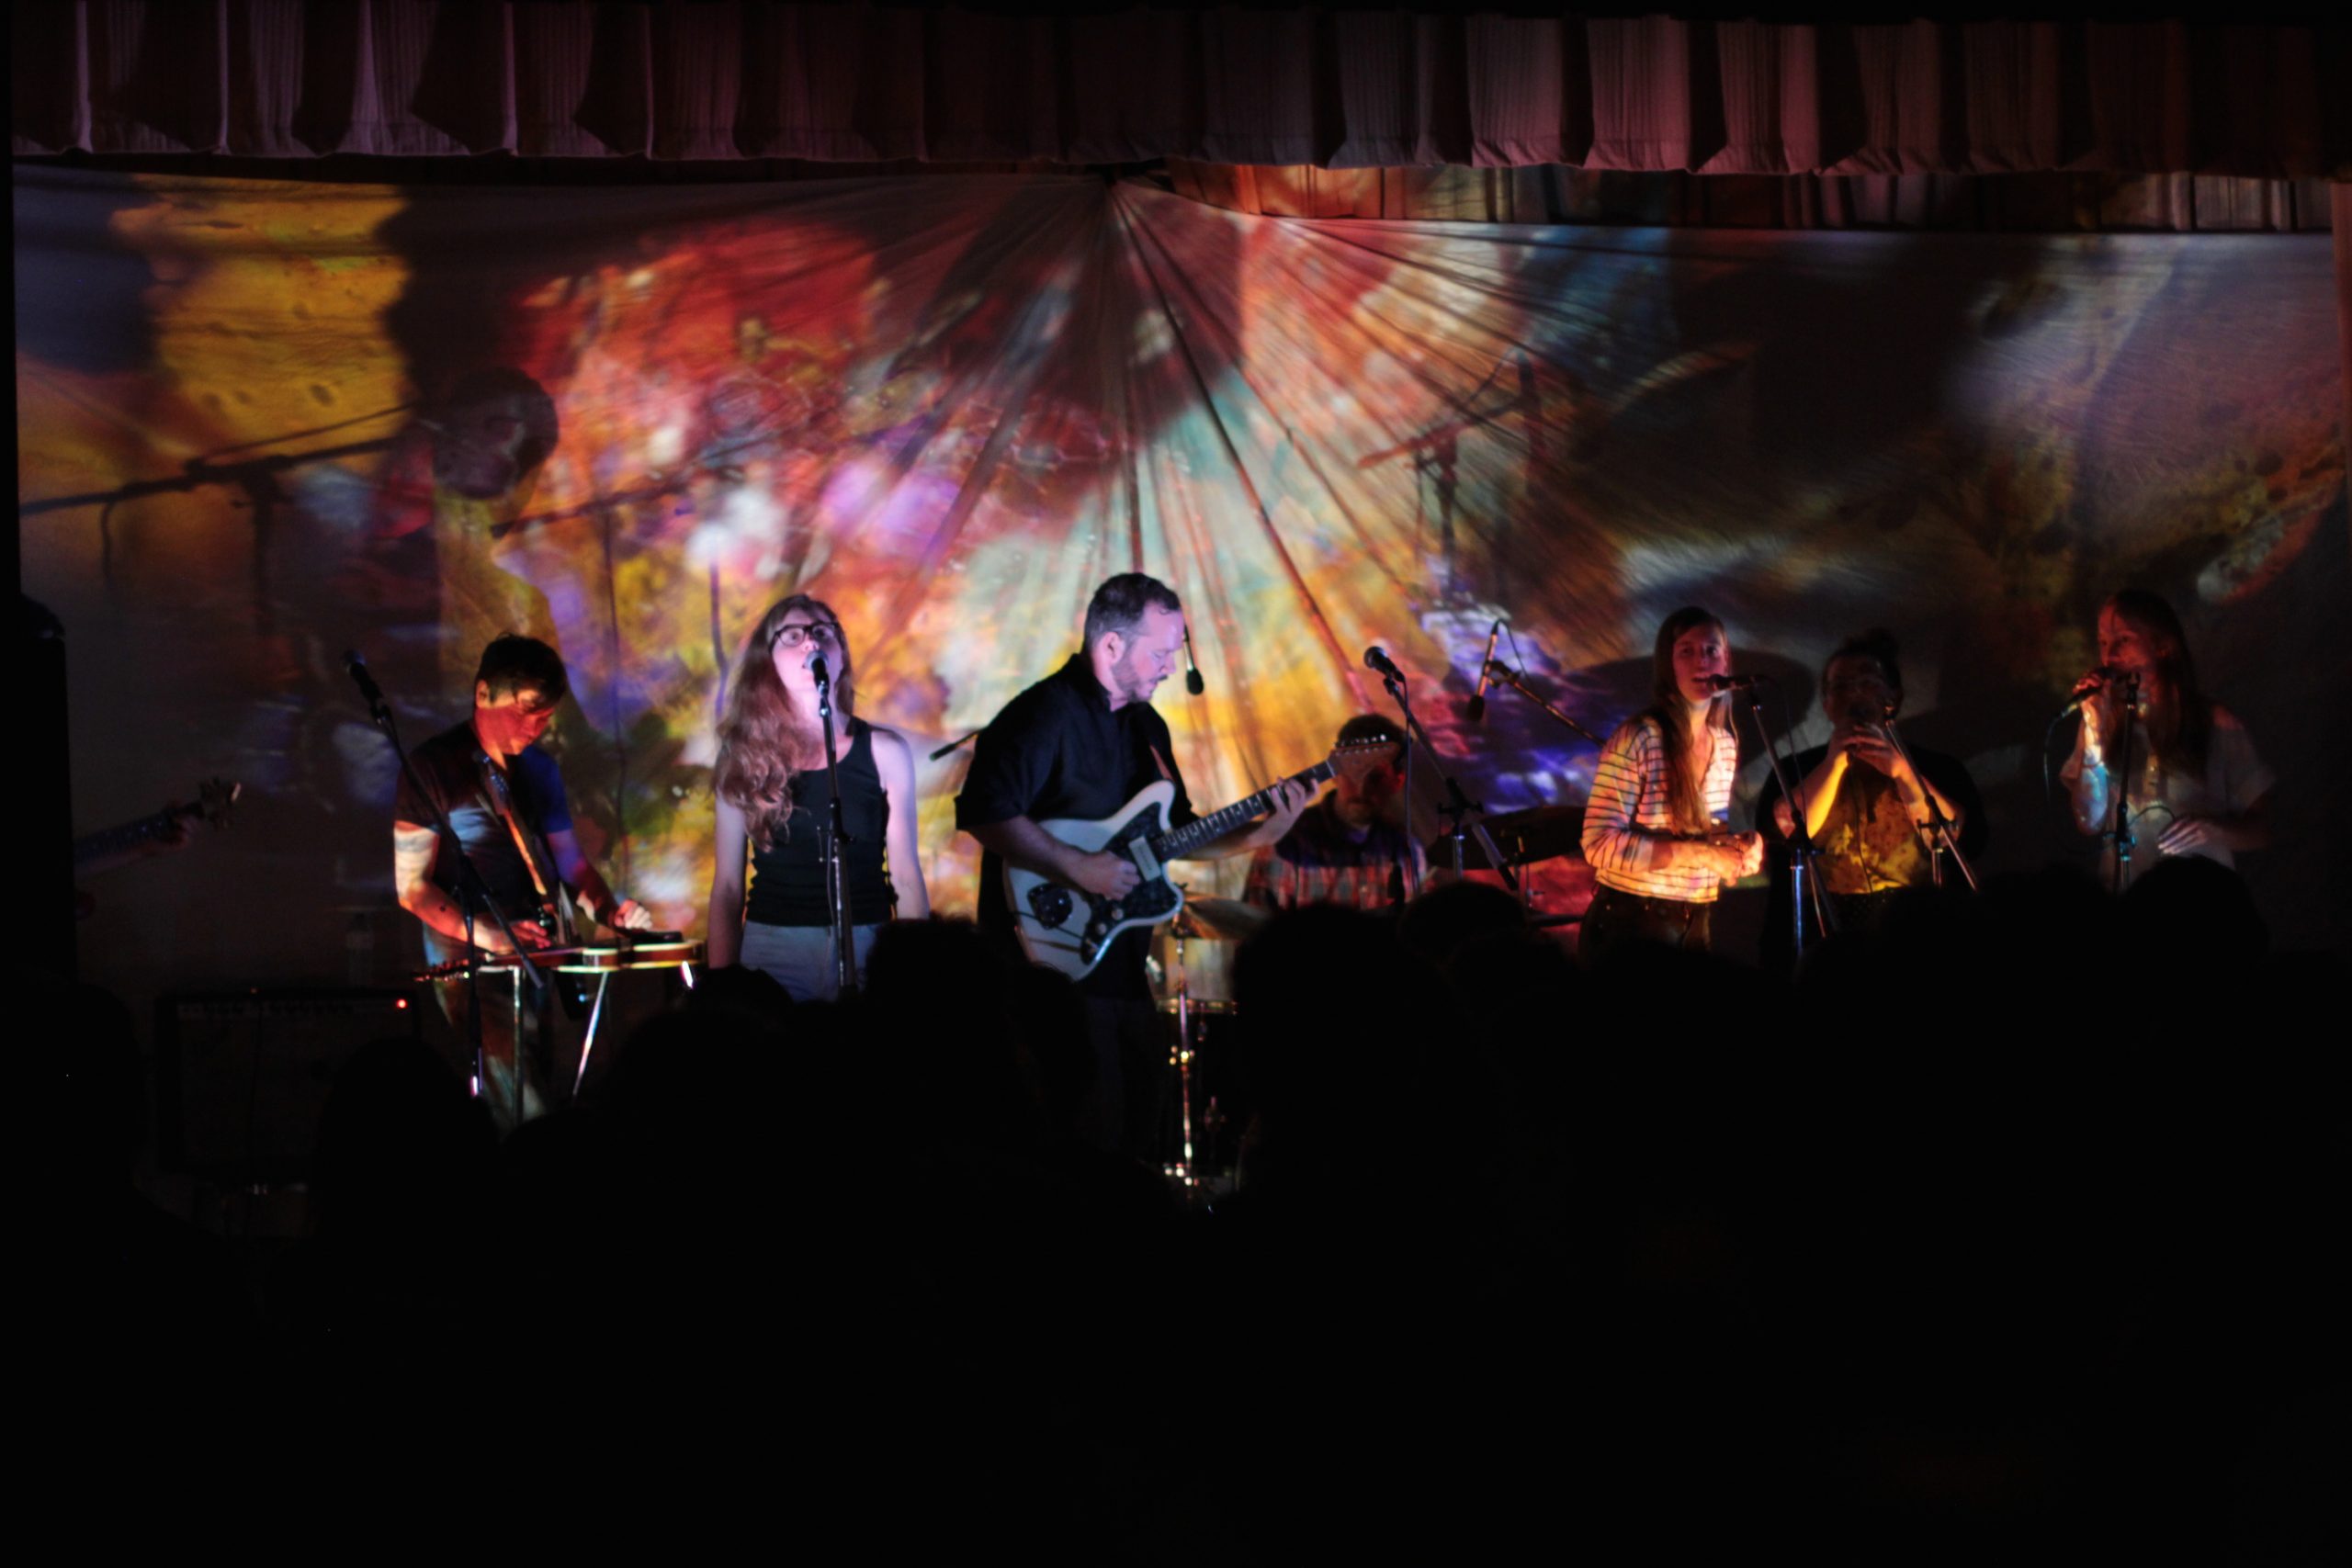     Samuel Kadosh, Indie band Bruce Peninsula perform live at the Polish Combatants Hall, 2014

